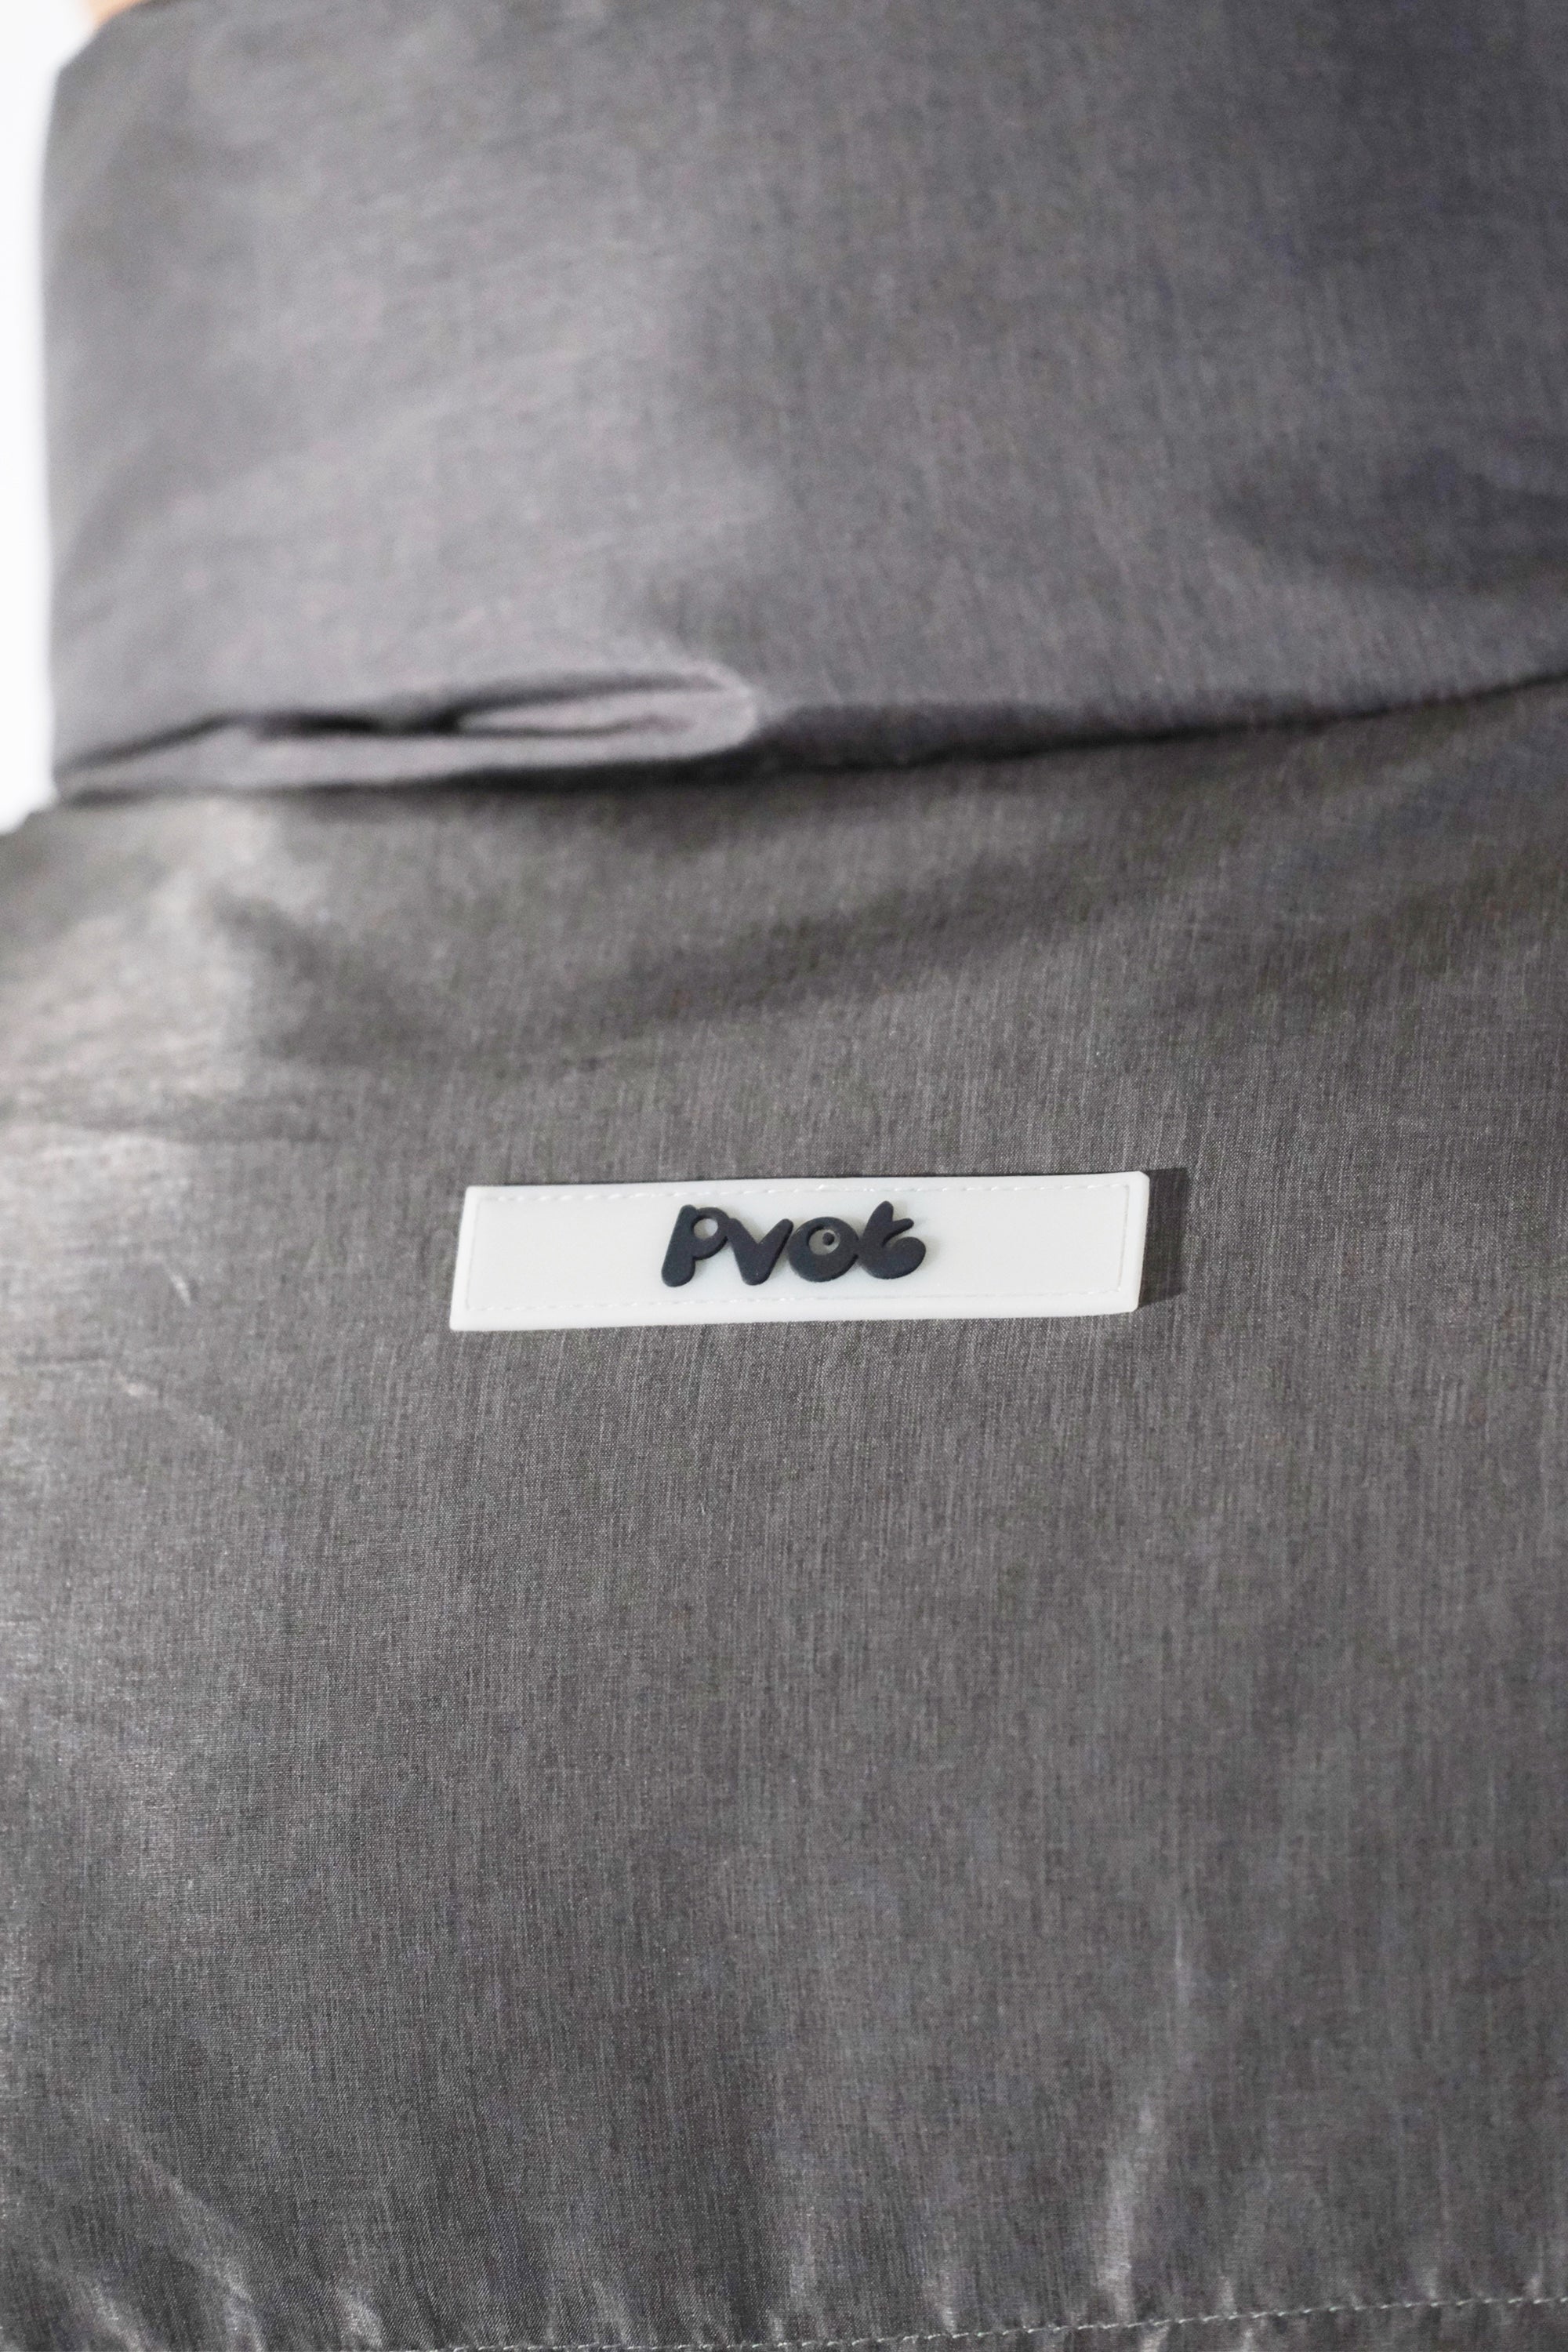 Pvot Premium Puffer Jacket (Moss Olive)